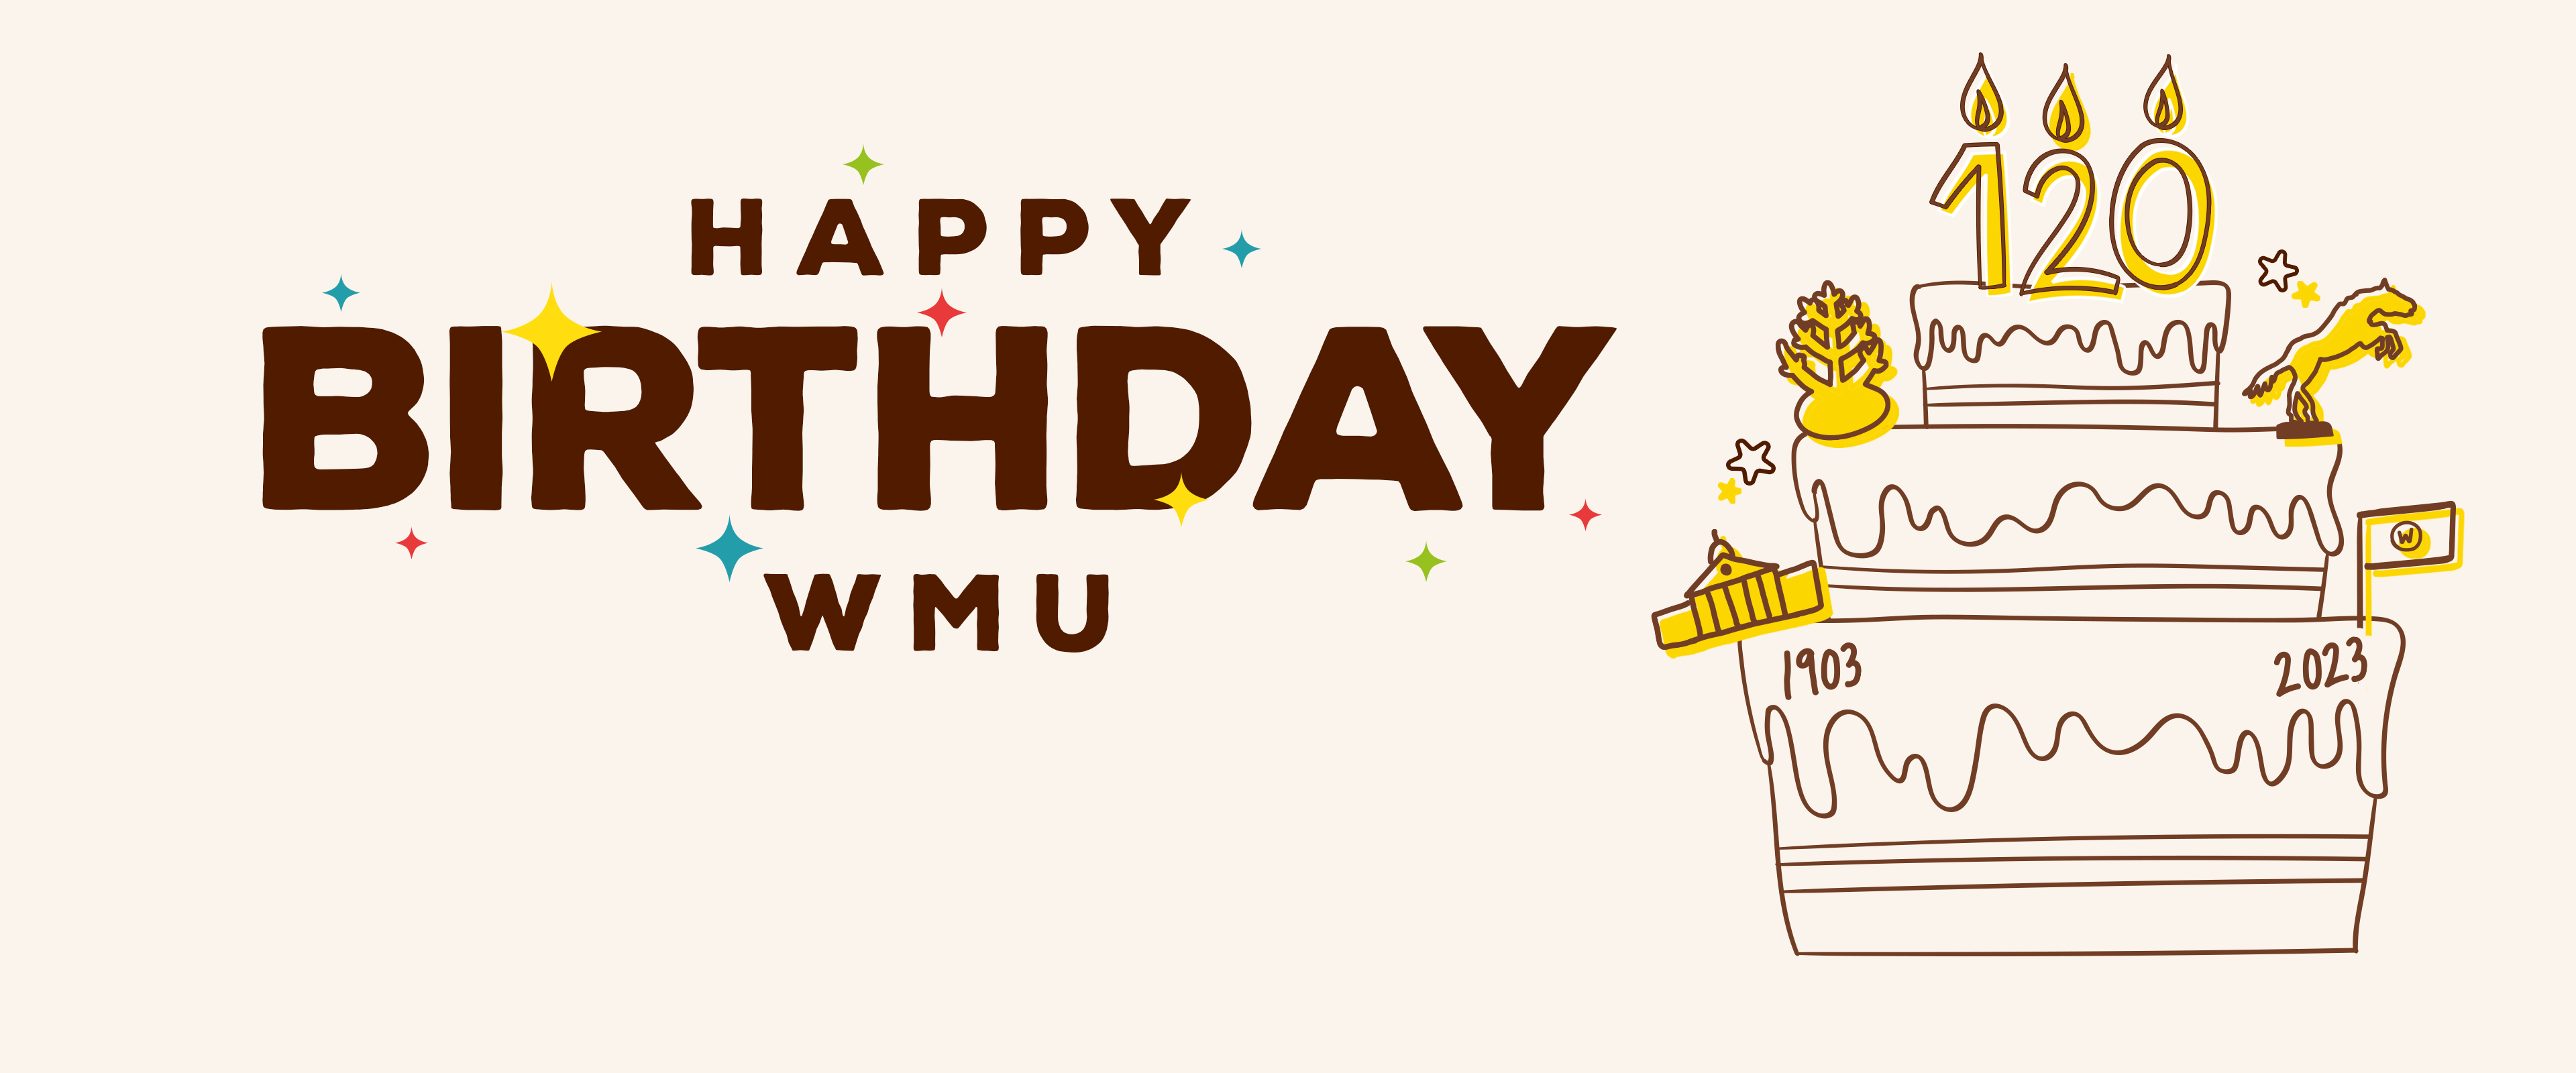 Happy birthday WMU